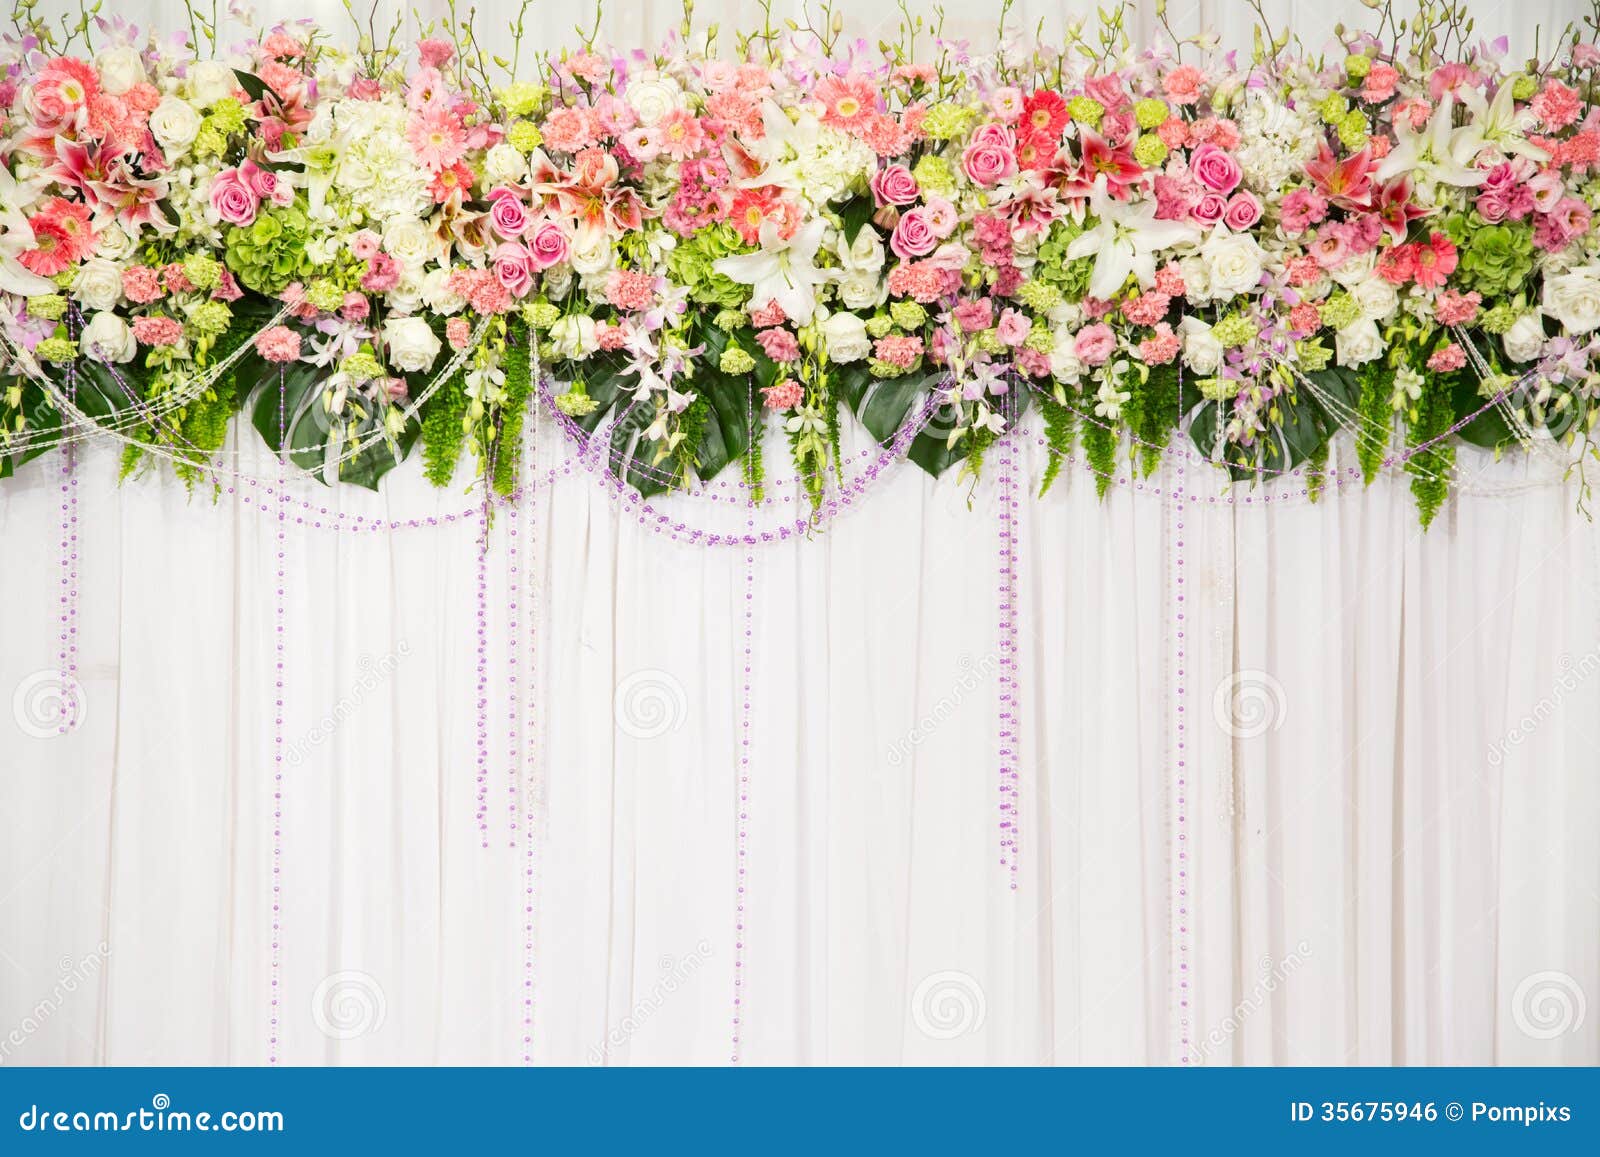 Flower wedding backgrounds